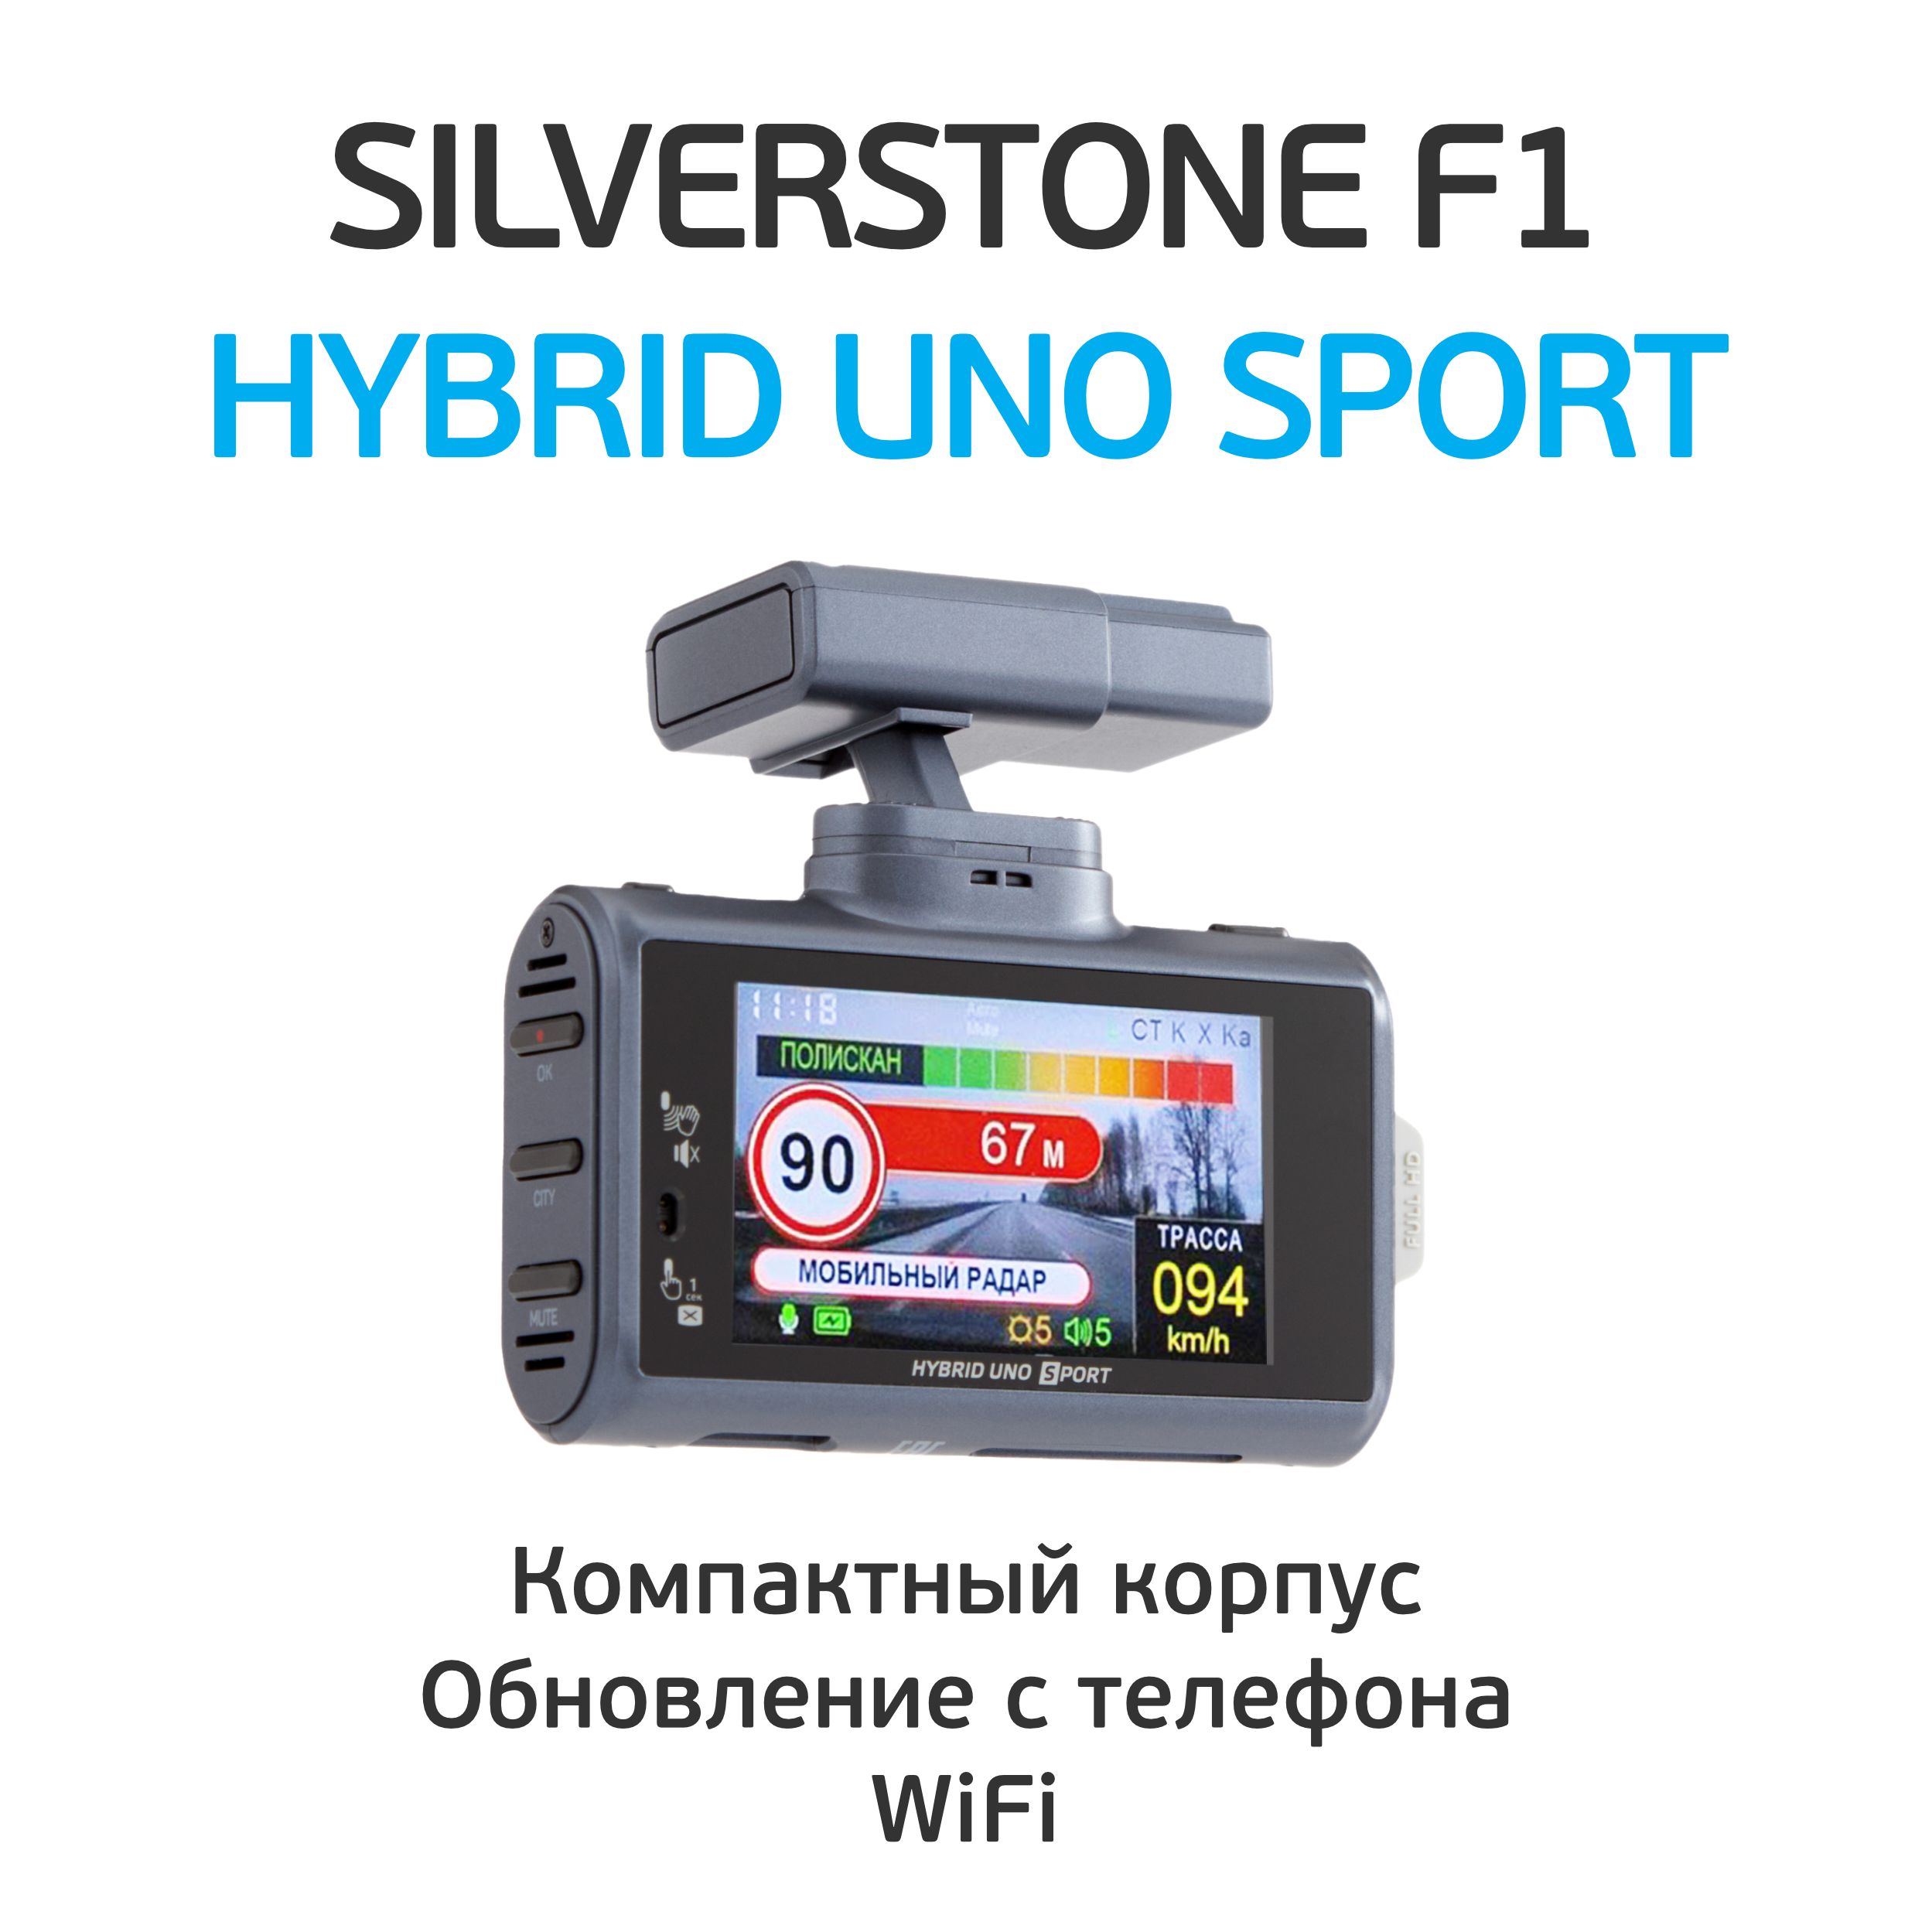 Silverstone f1 Hybrid uno Sport обновление прошивки. Silverstone f1 Hybrid uno Sport Wi-Fi отзывы.